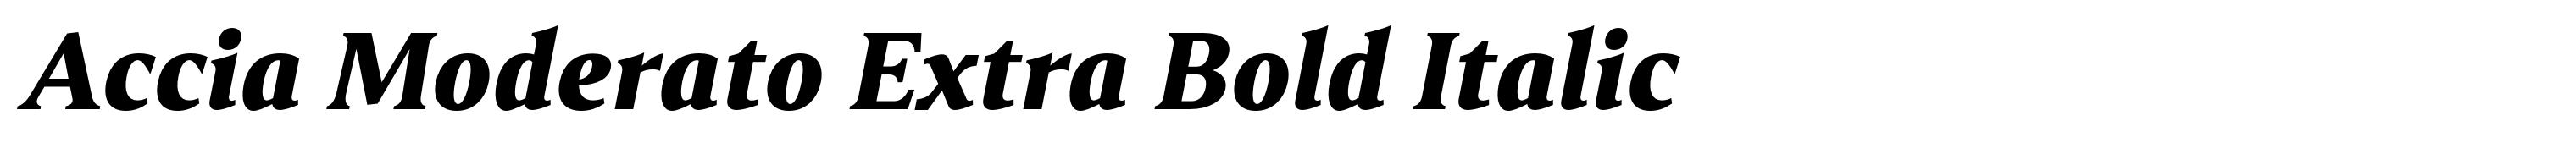 Accia Moderato Extra Bold Italic